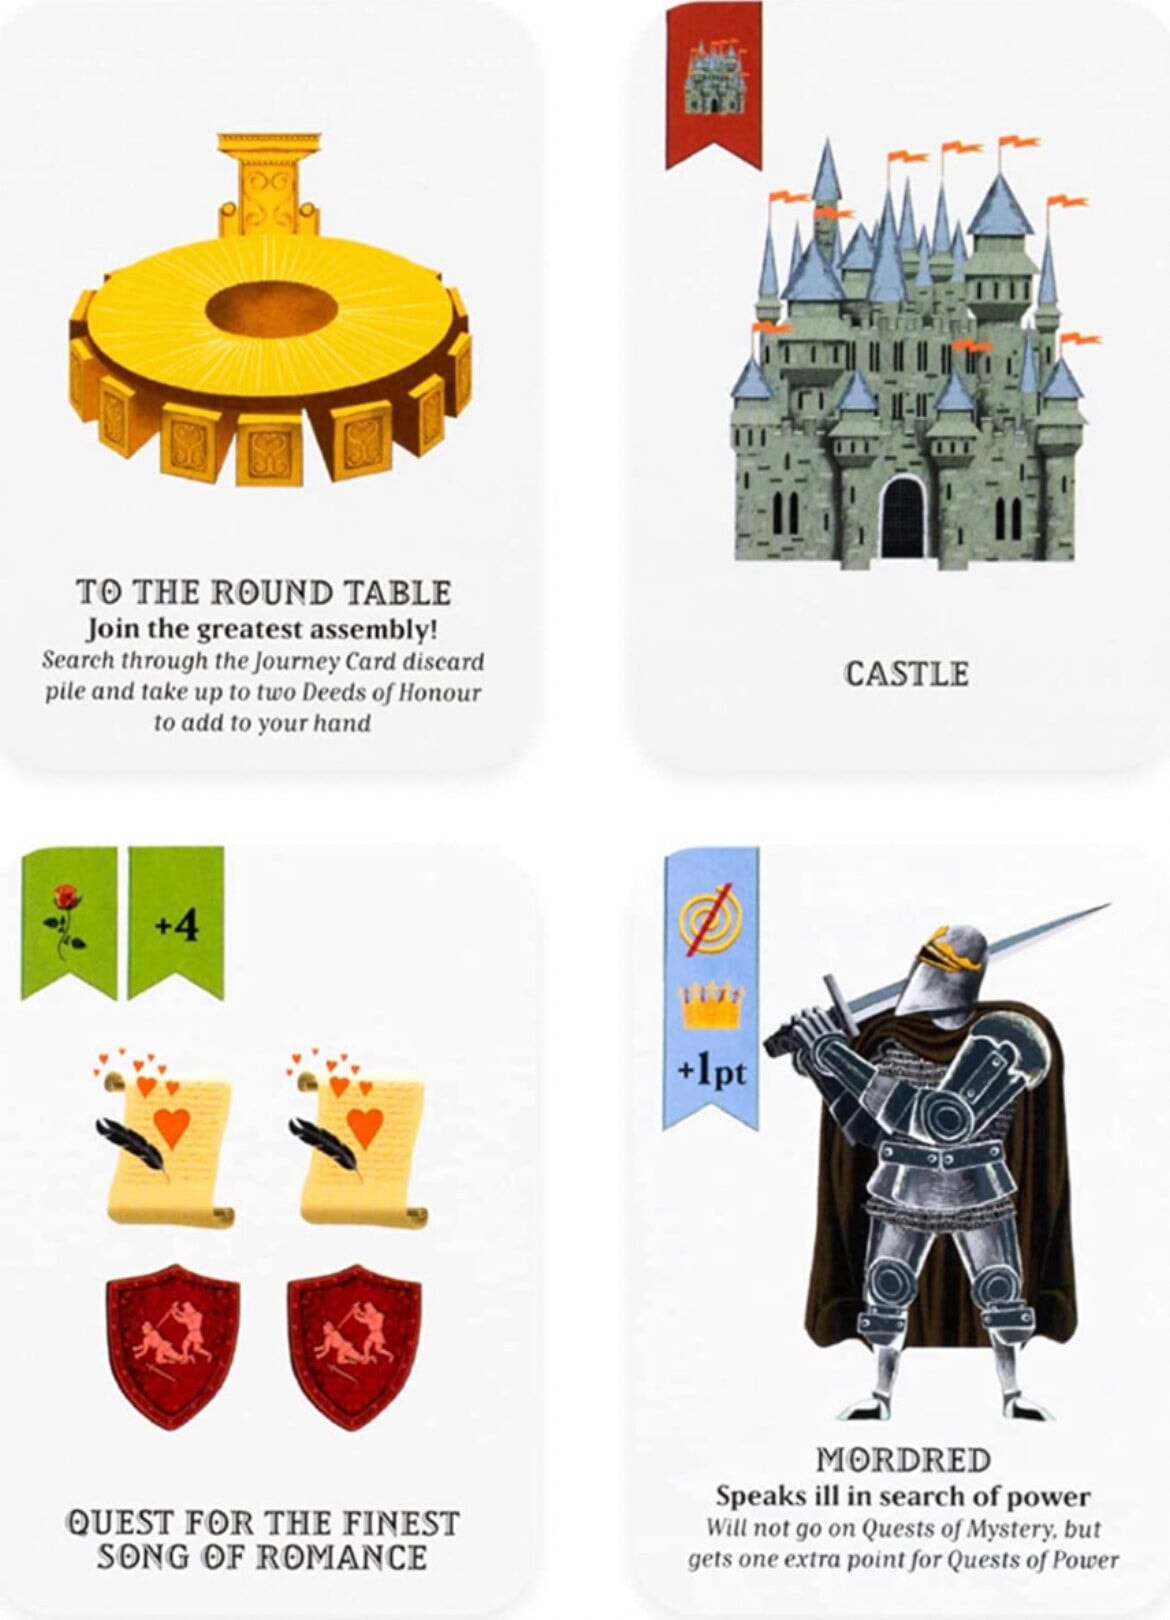 The Legend of King Arthur: A Quest Card Game Card Games - Alder & Alouette